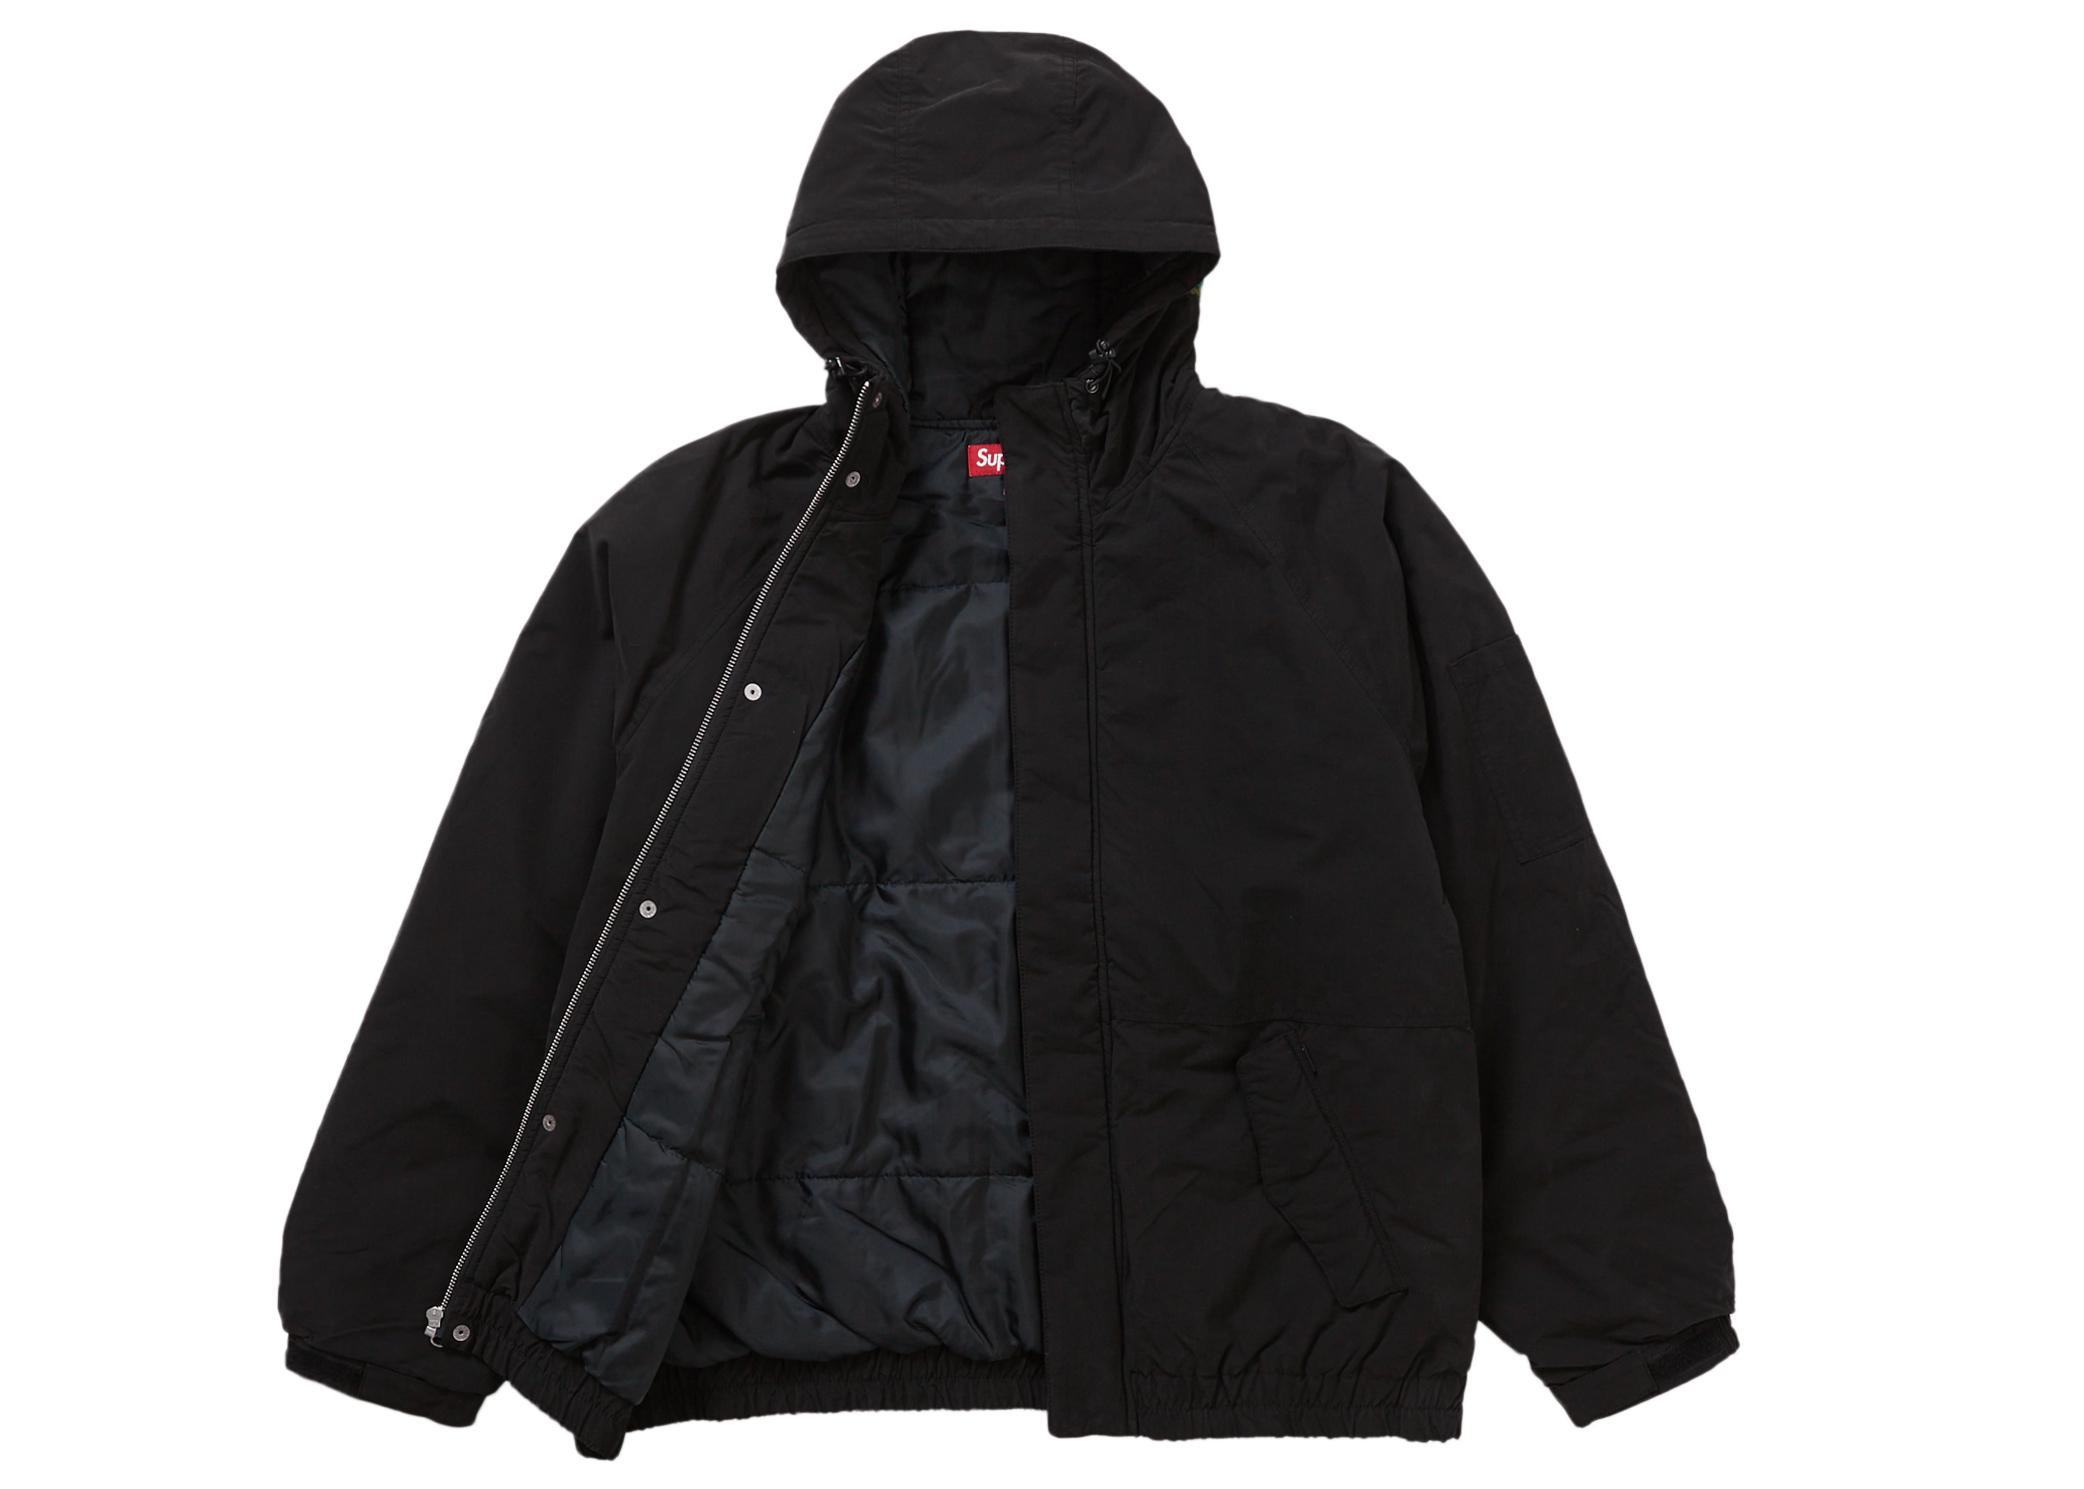 supreme needlepoint hooded jacket Sサイズよろしくお願いいたします